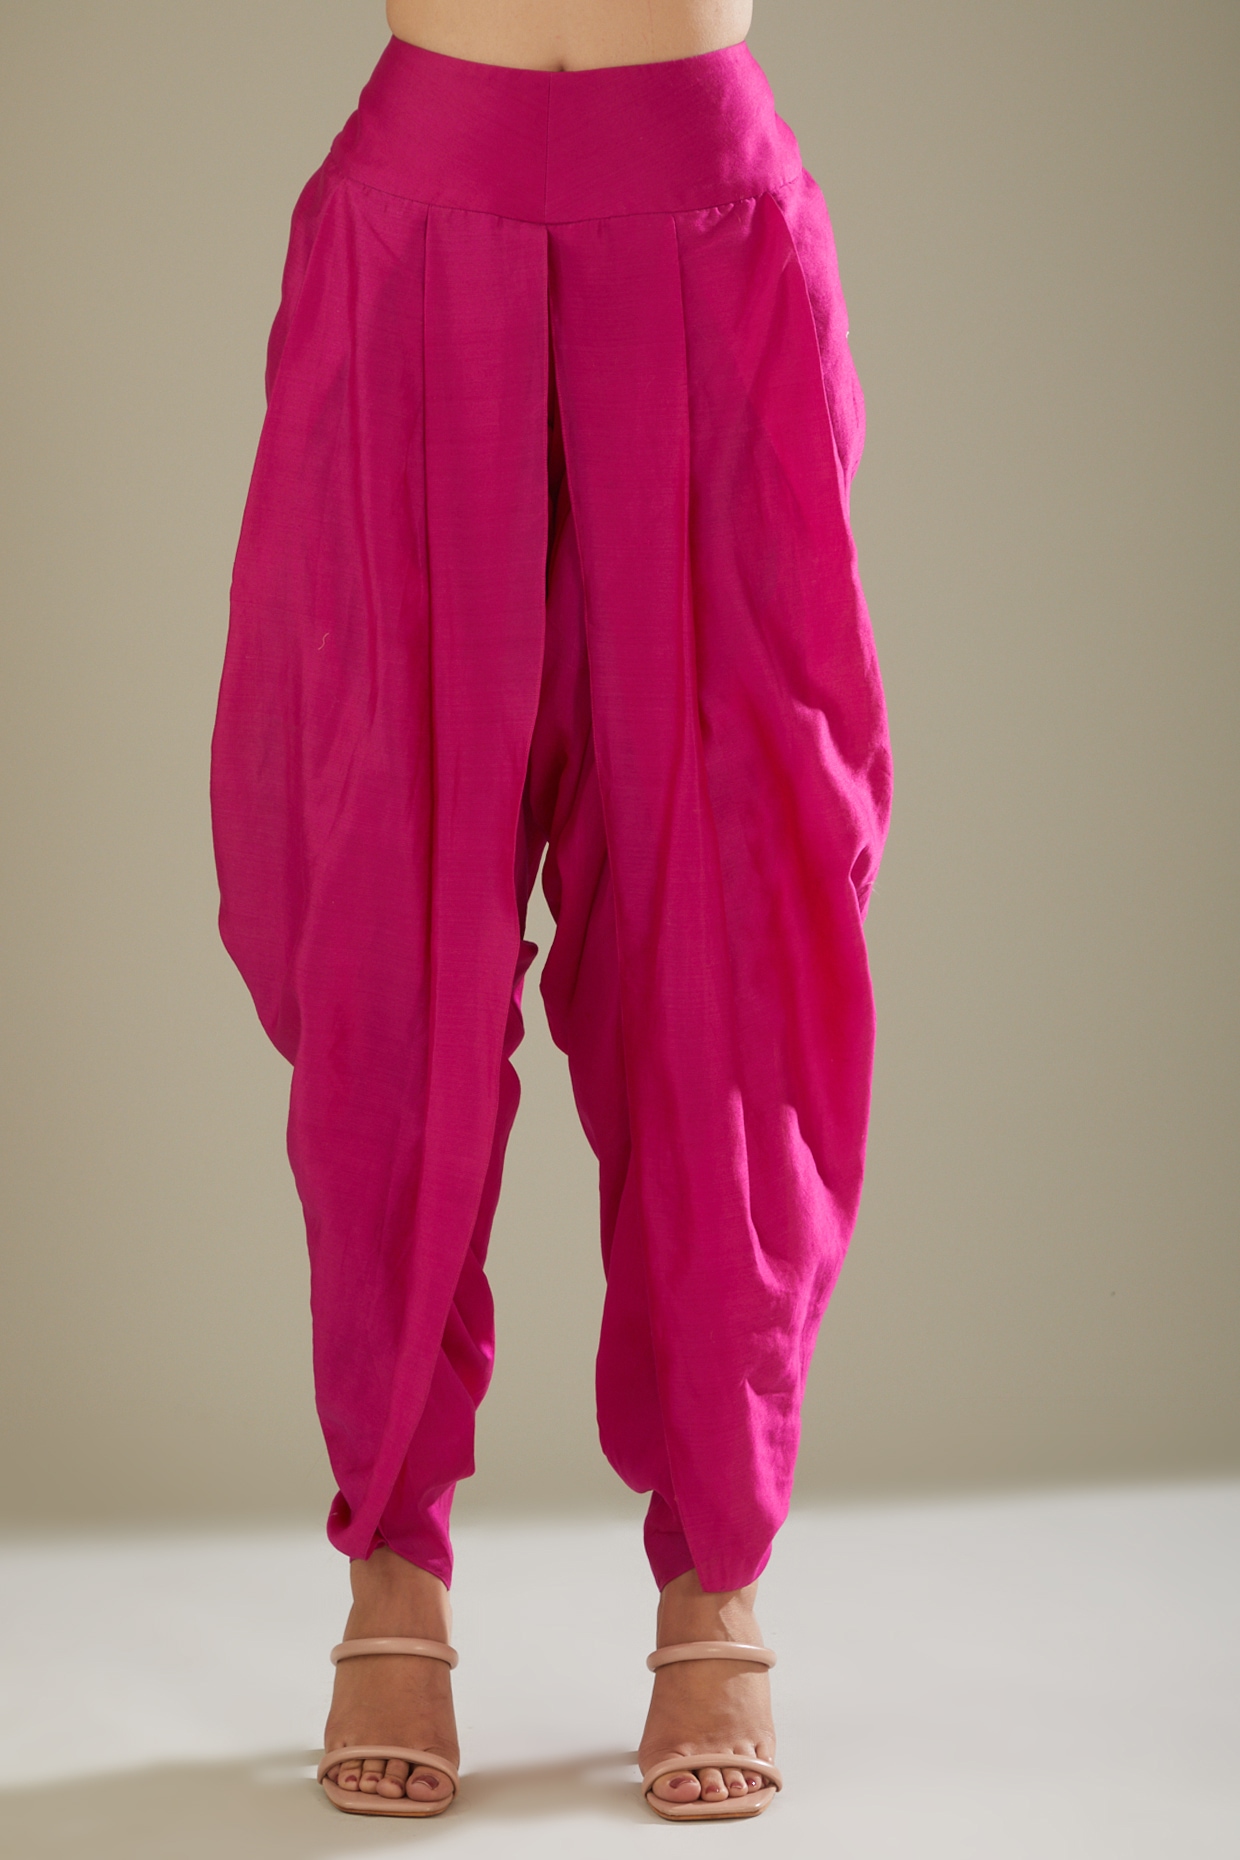 eloria Men's Dhoti Indian Men's Rayon Dhoti Aladdin Style Pants, Color:  Pink | Free Size - Walmart.com